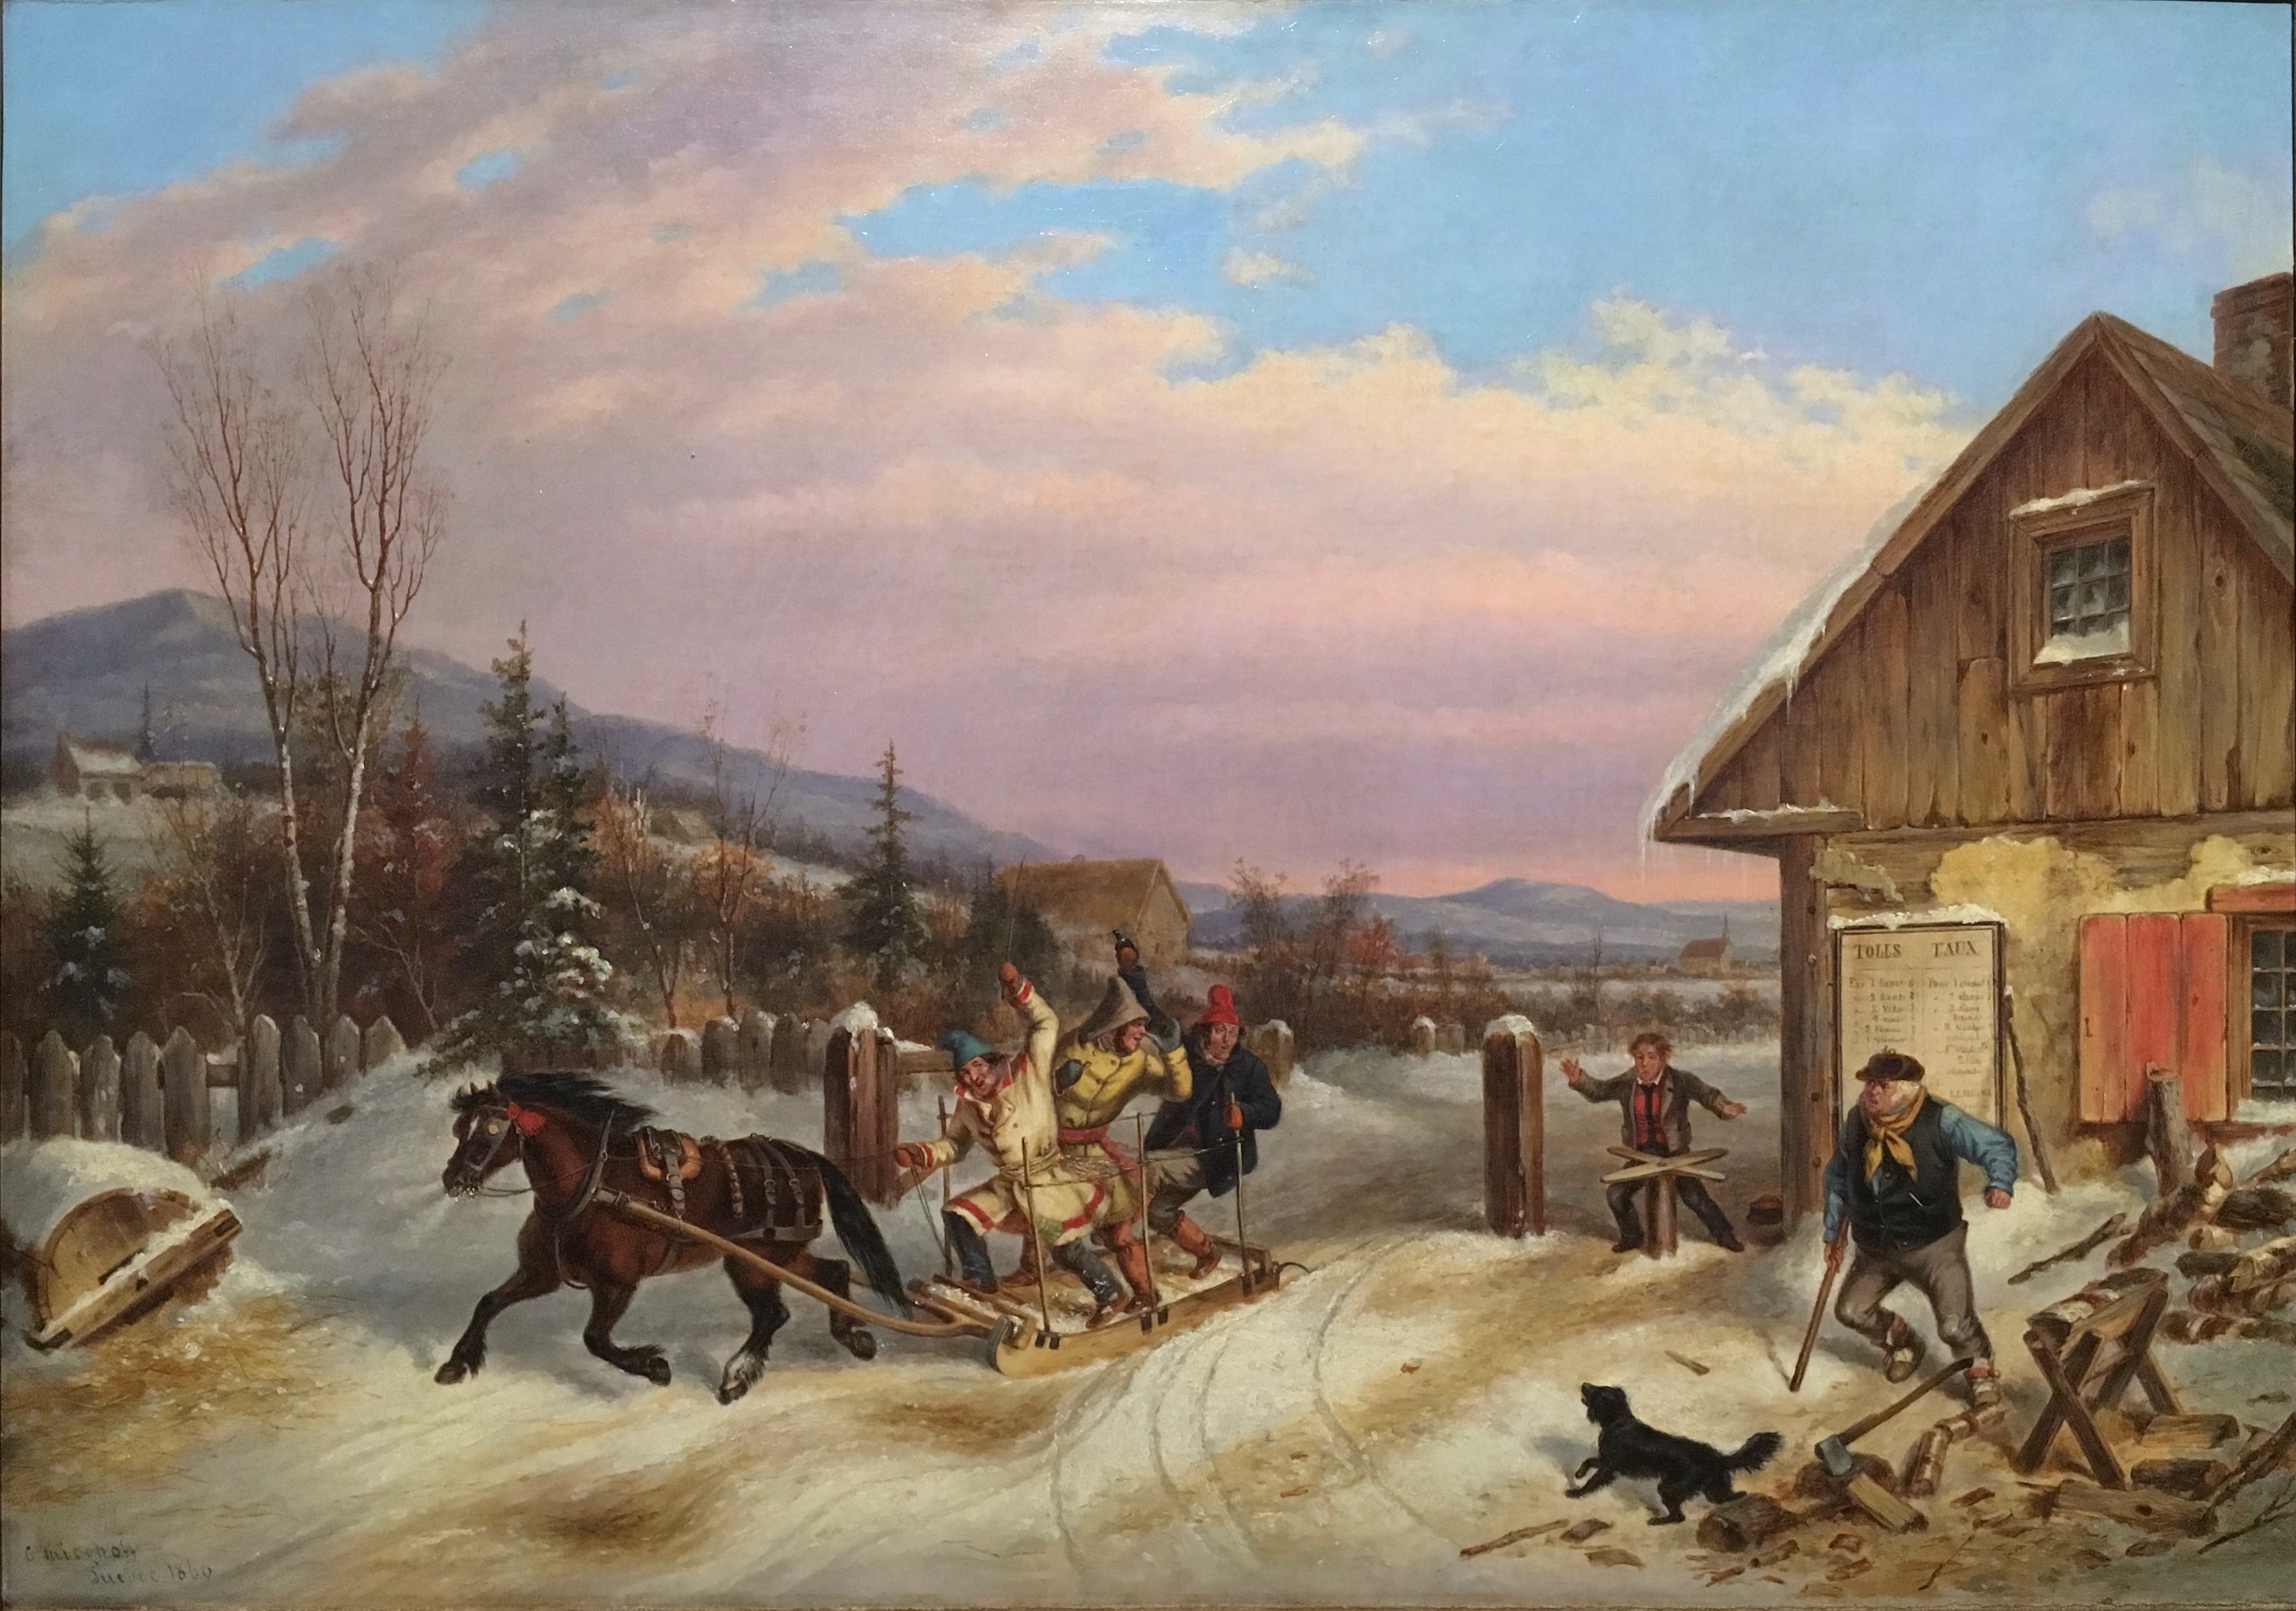 Bilking the Toll by Cornelius Krieghoff - 1860 Winnipeg Art Gallery